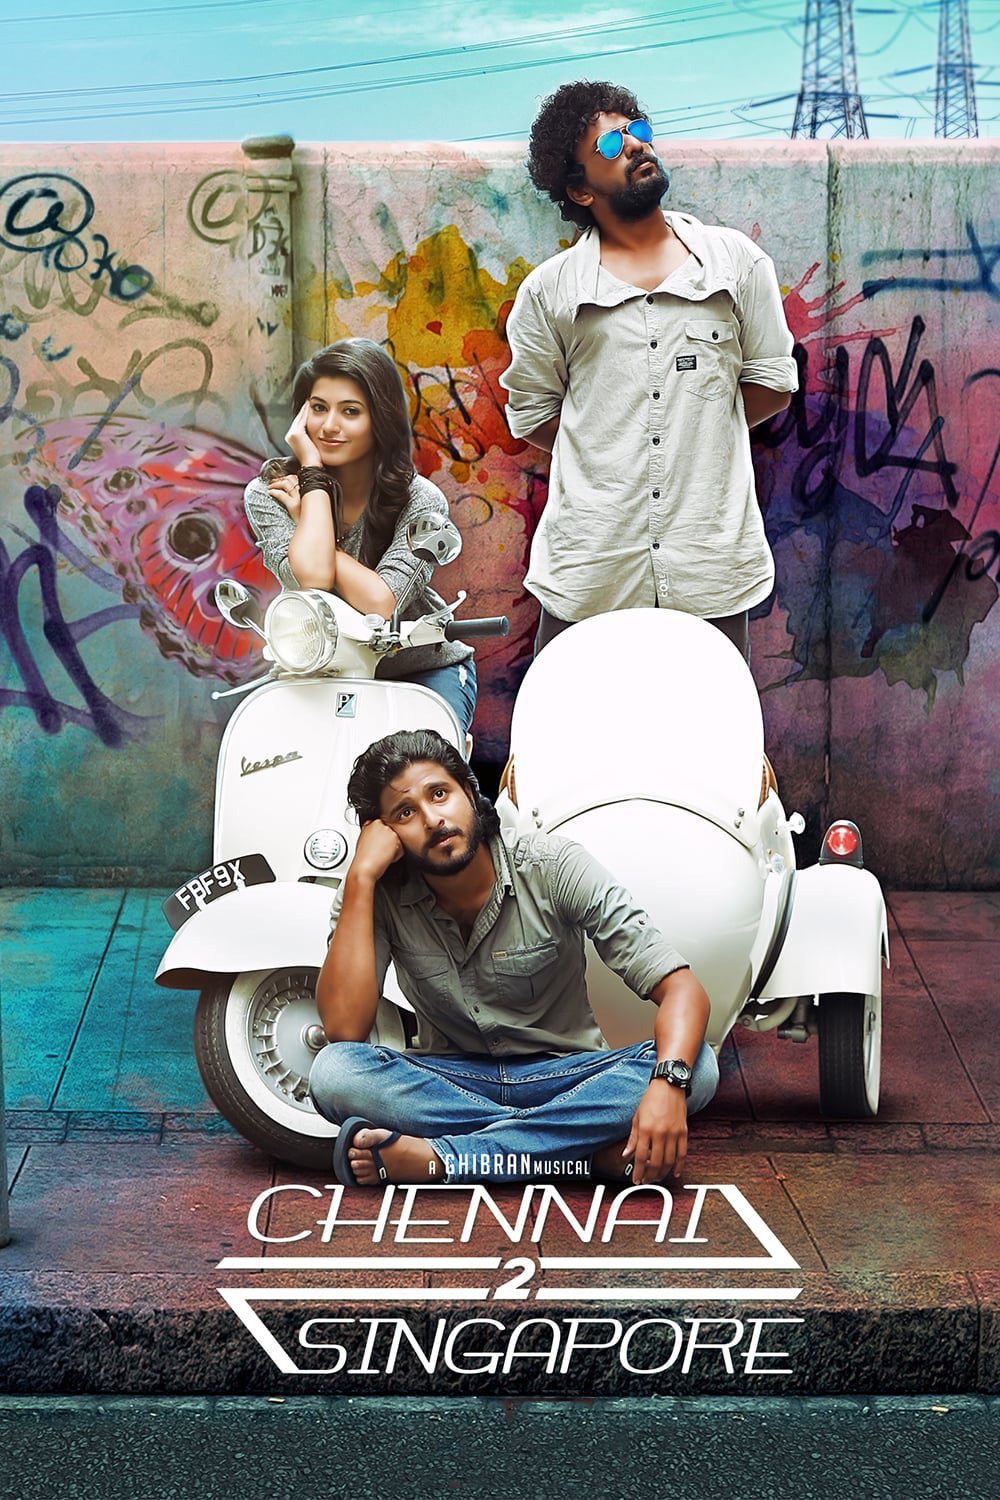 Poster for the movie "Chennai 2 Singapore"